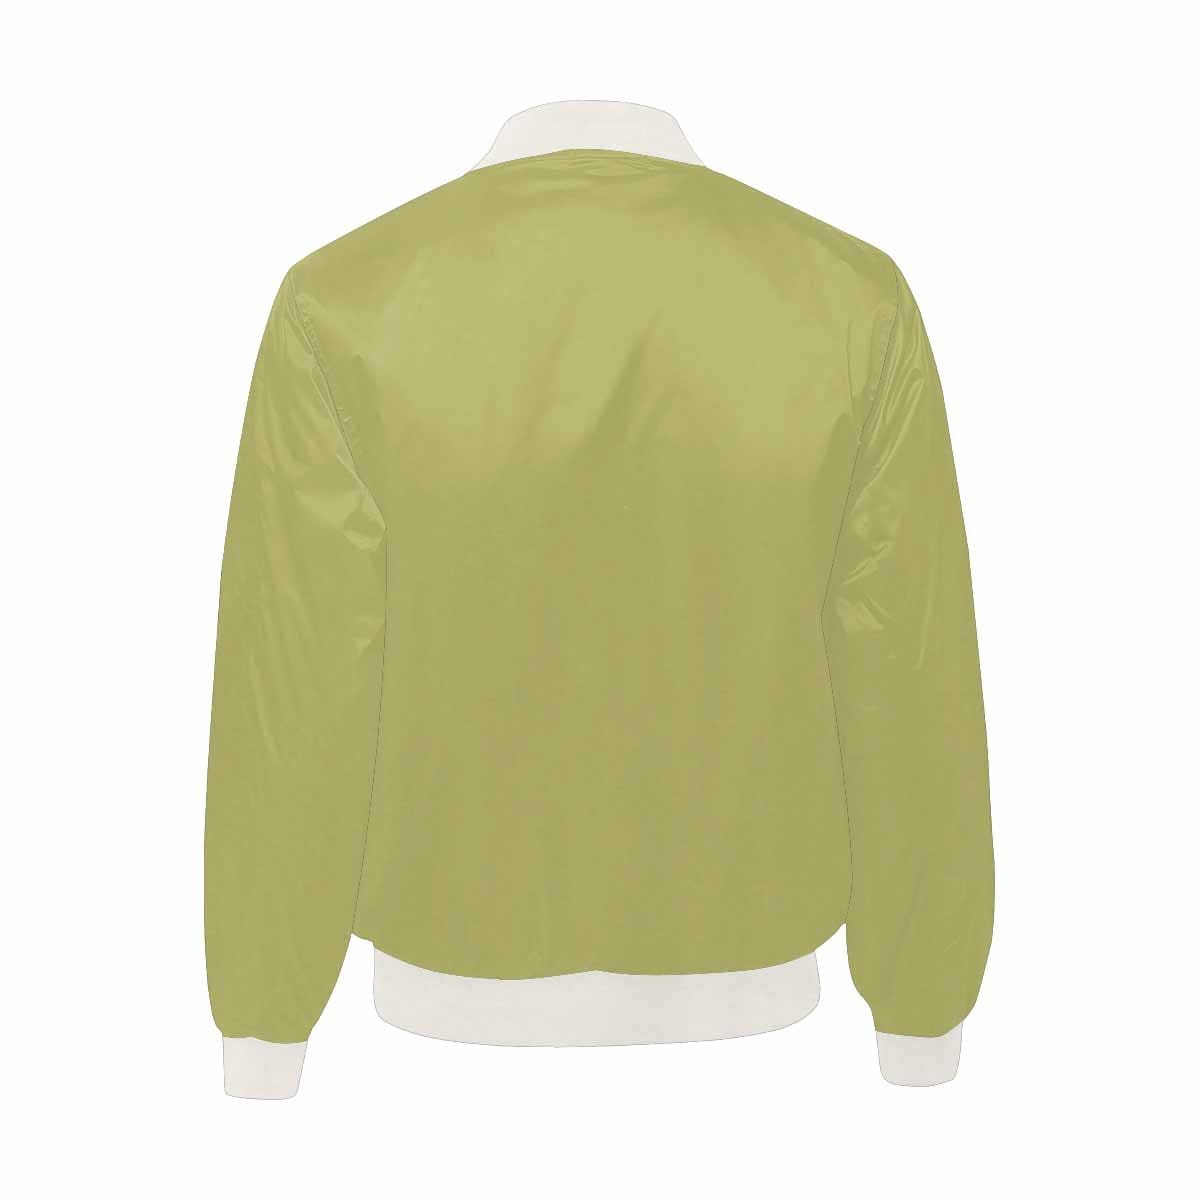 Mens Jacket Olive Green Bomber Jacket - Mens | Jackets | Bombers